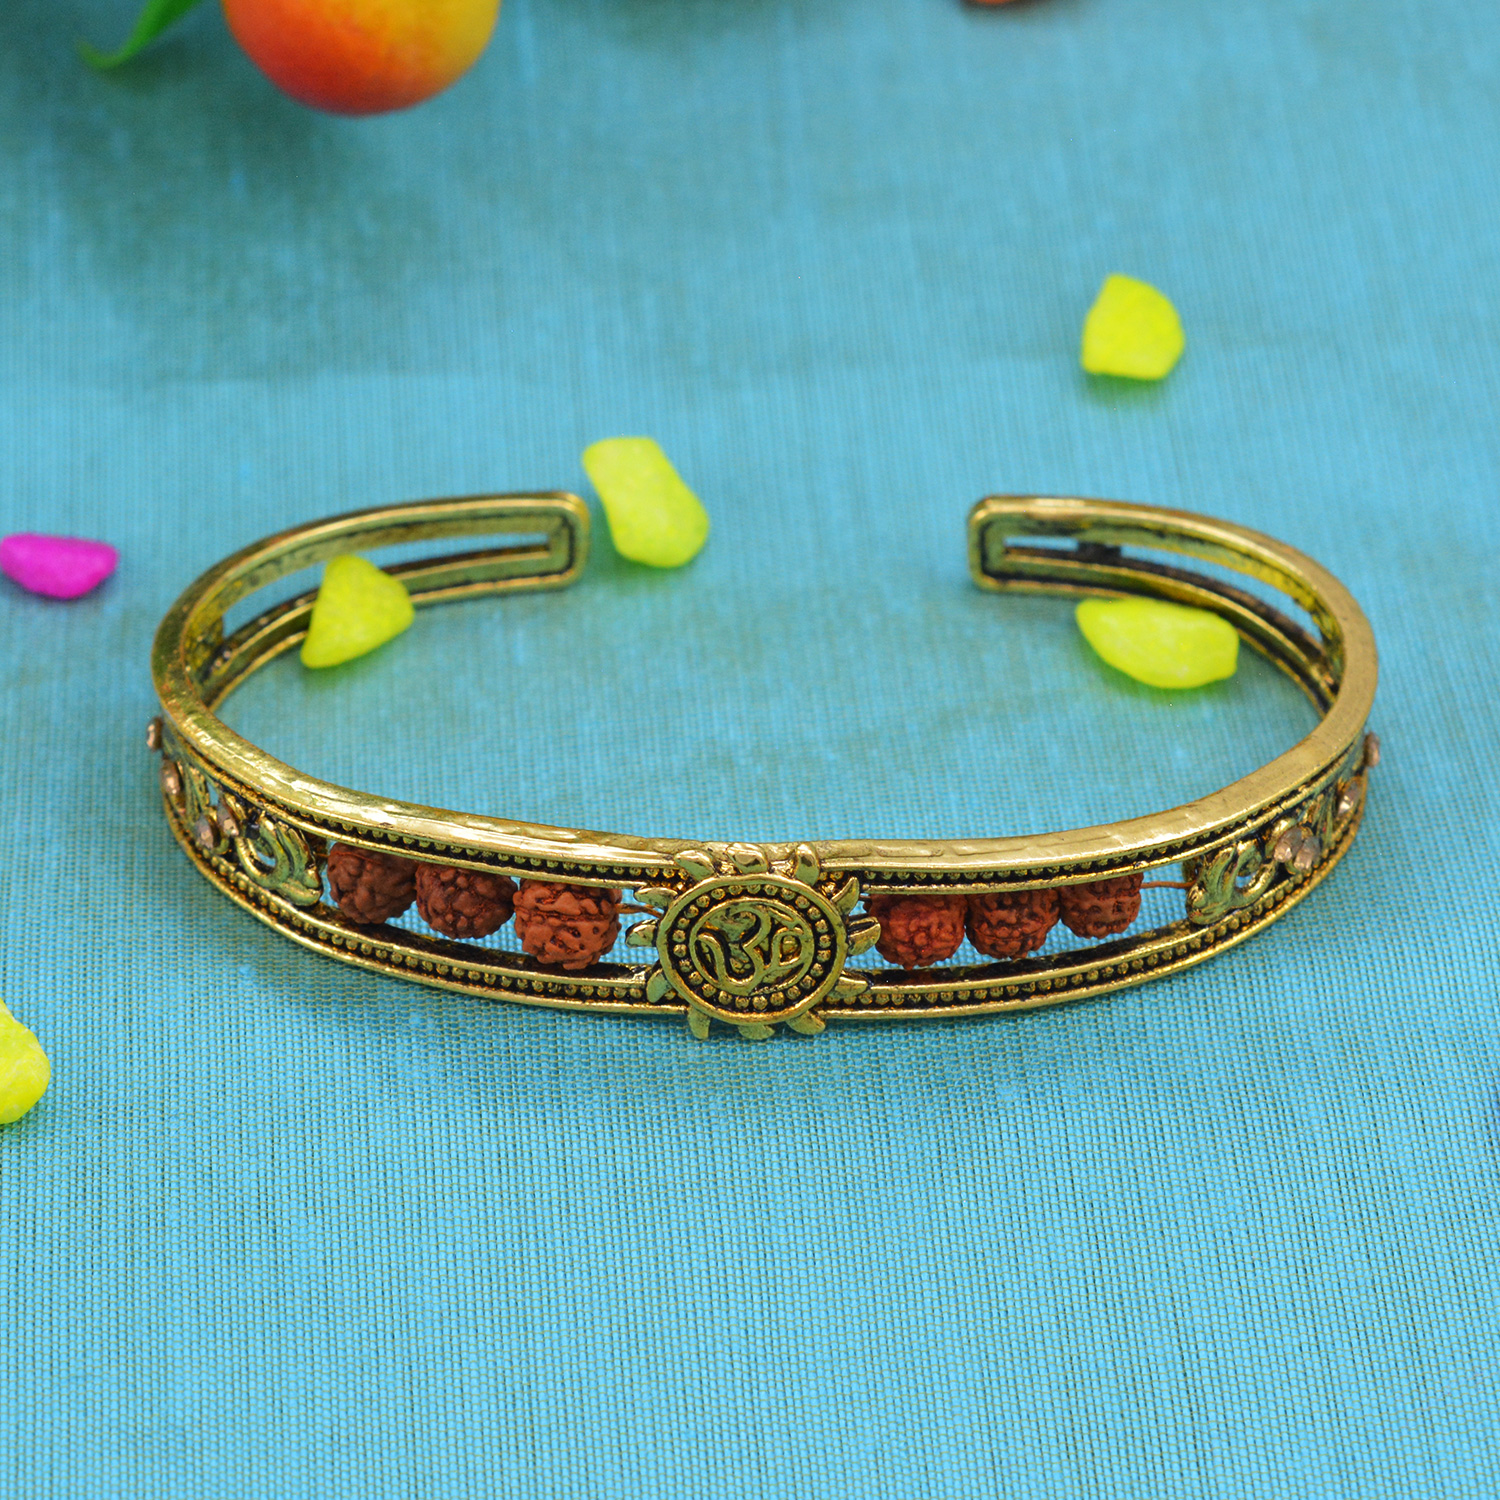 Prodigious Golden OM with Unique Rudraksha Rakhi Bracelet